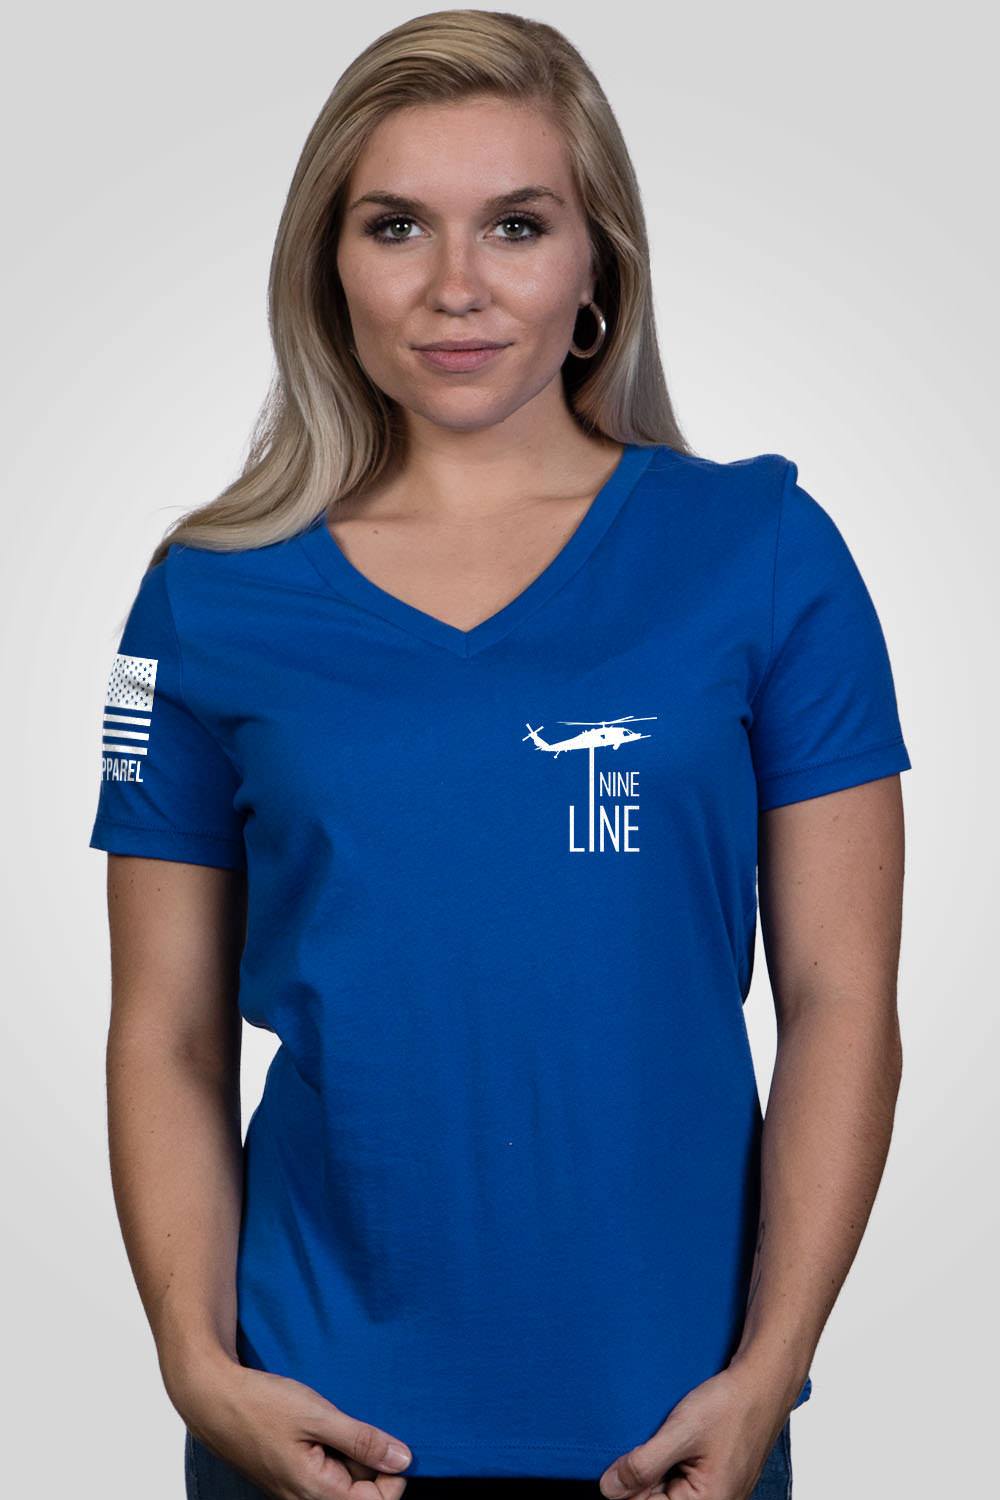 Women's Relaxed Fit V-Neck Shirt - America - Nine Line Apparel